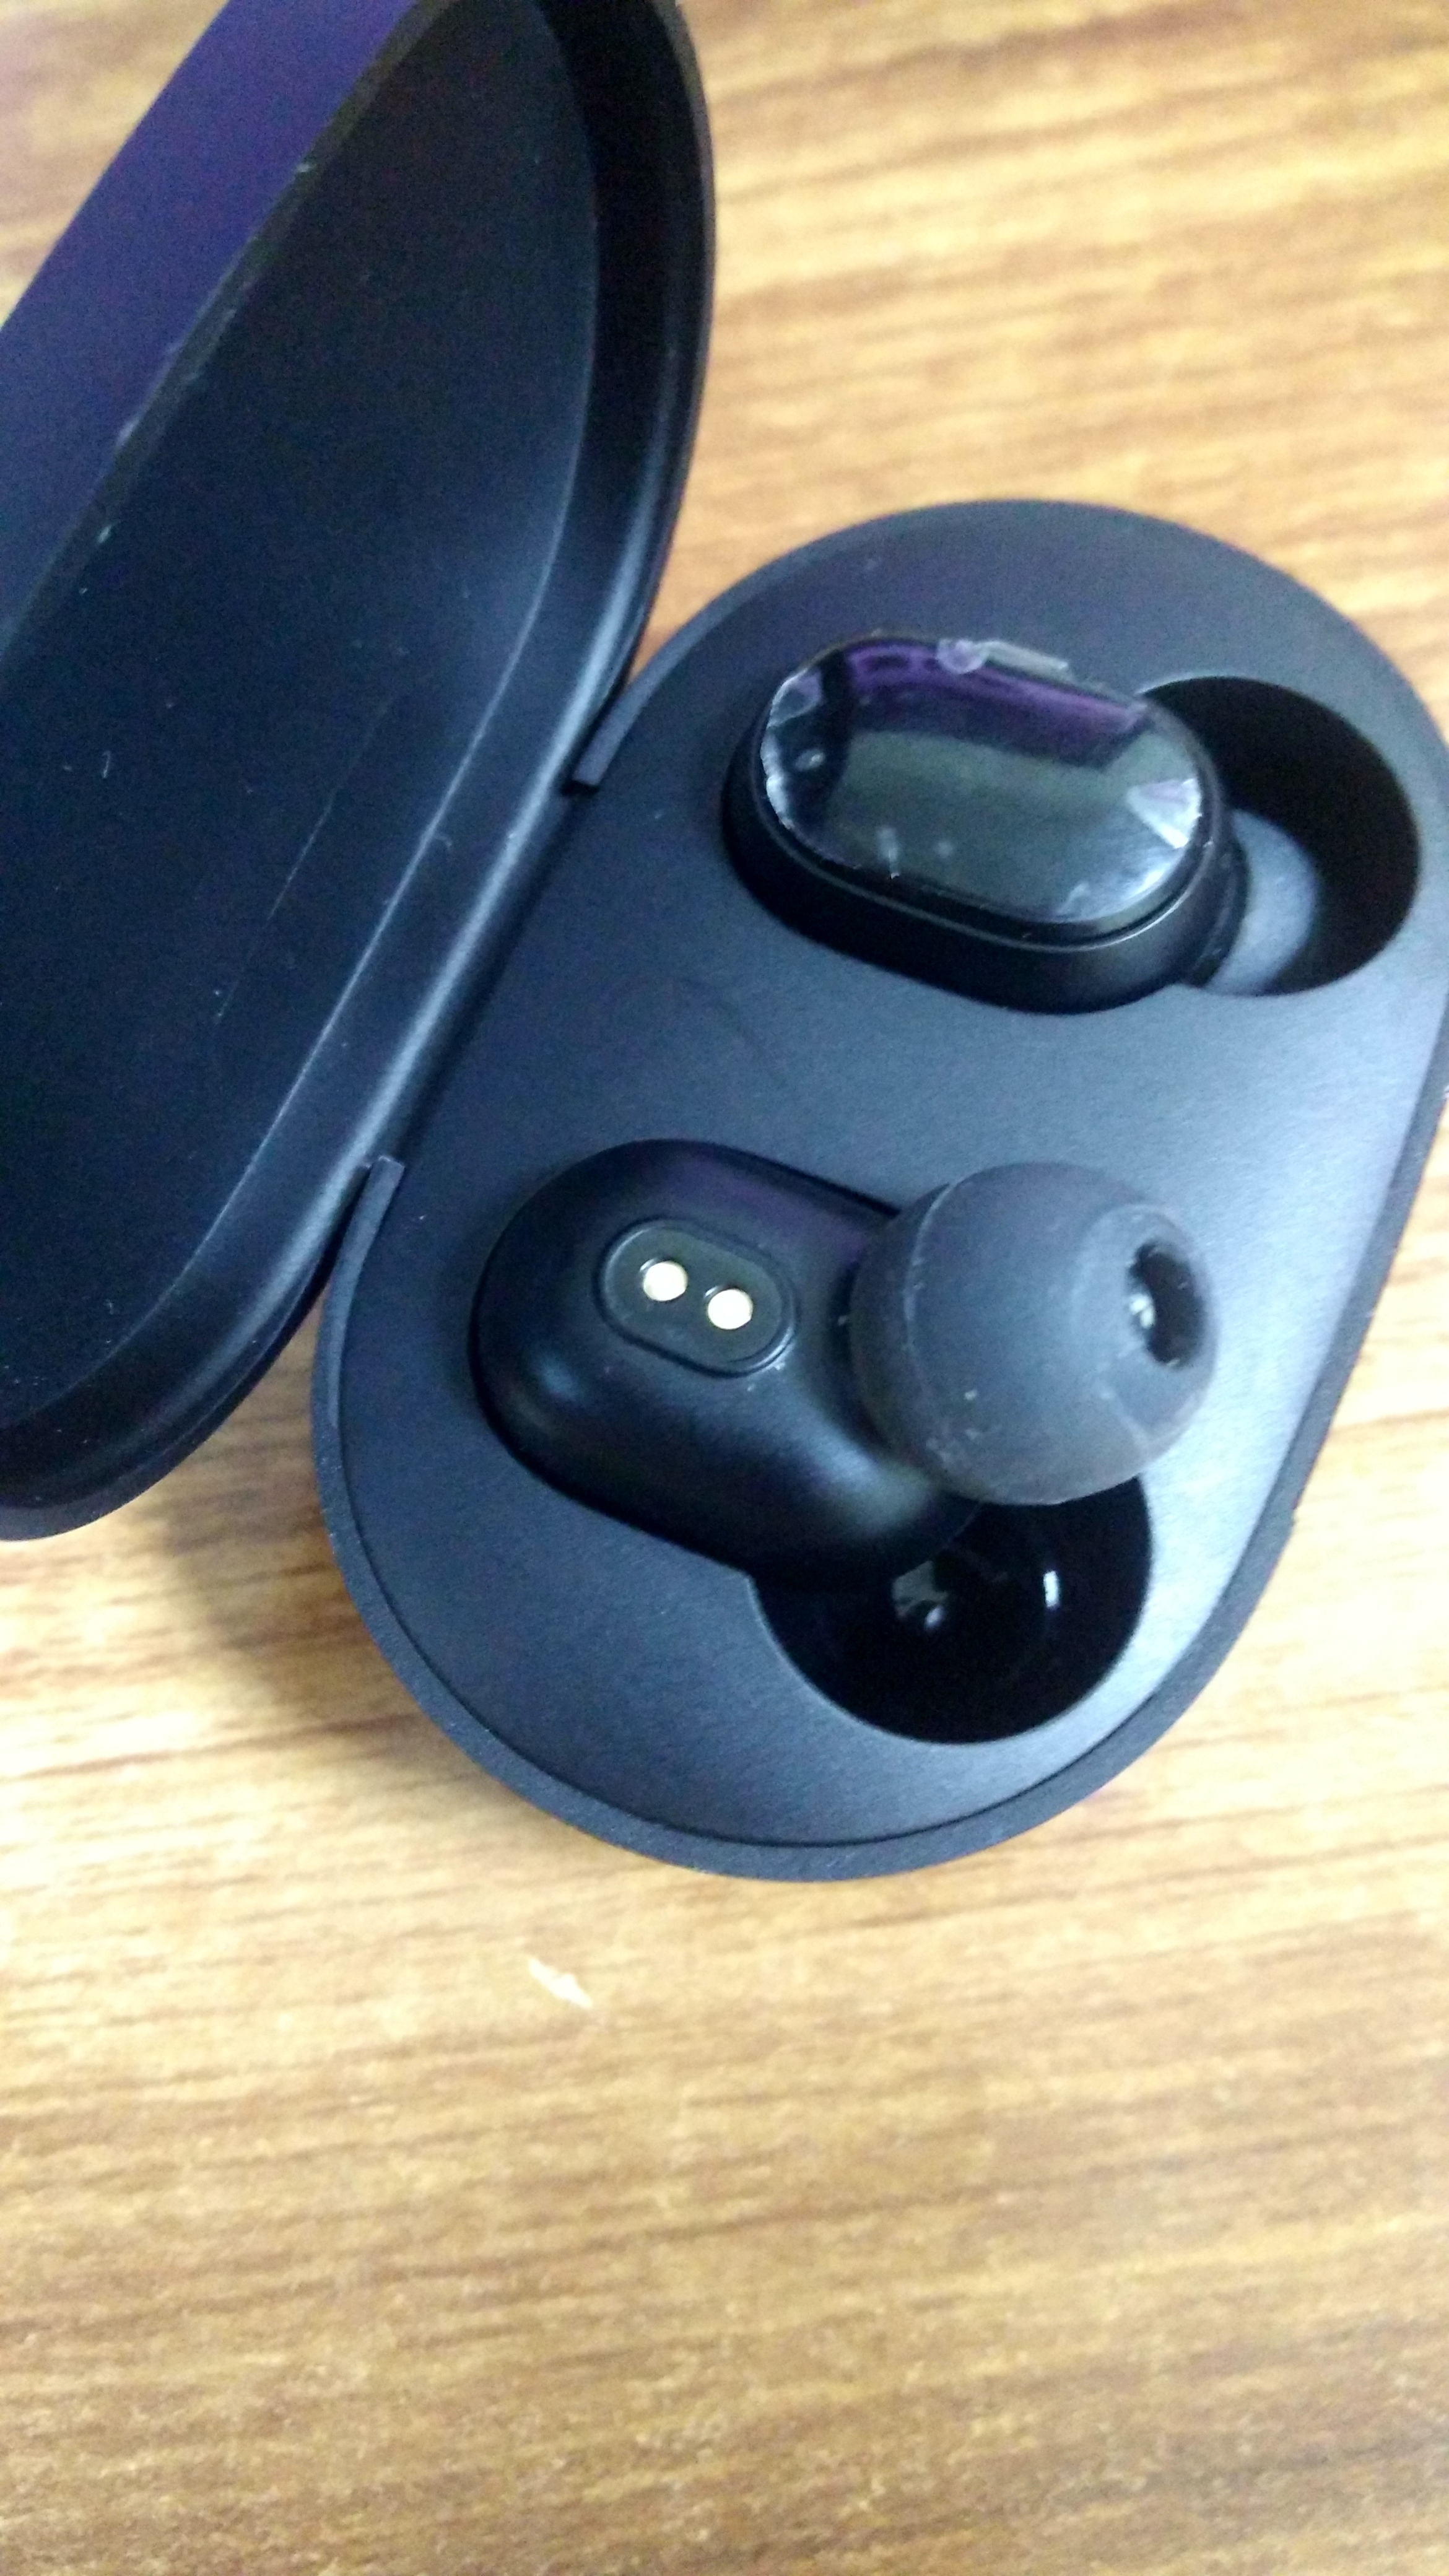 Redmi AirDots 真无线无线蓝牙耳机简易测评填补